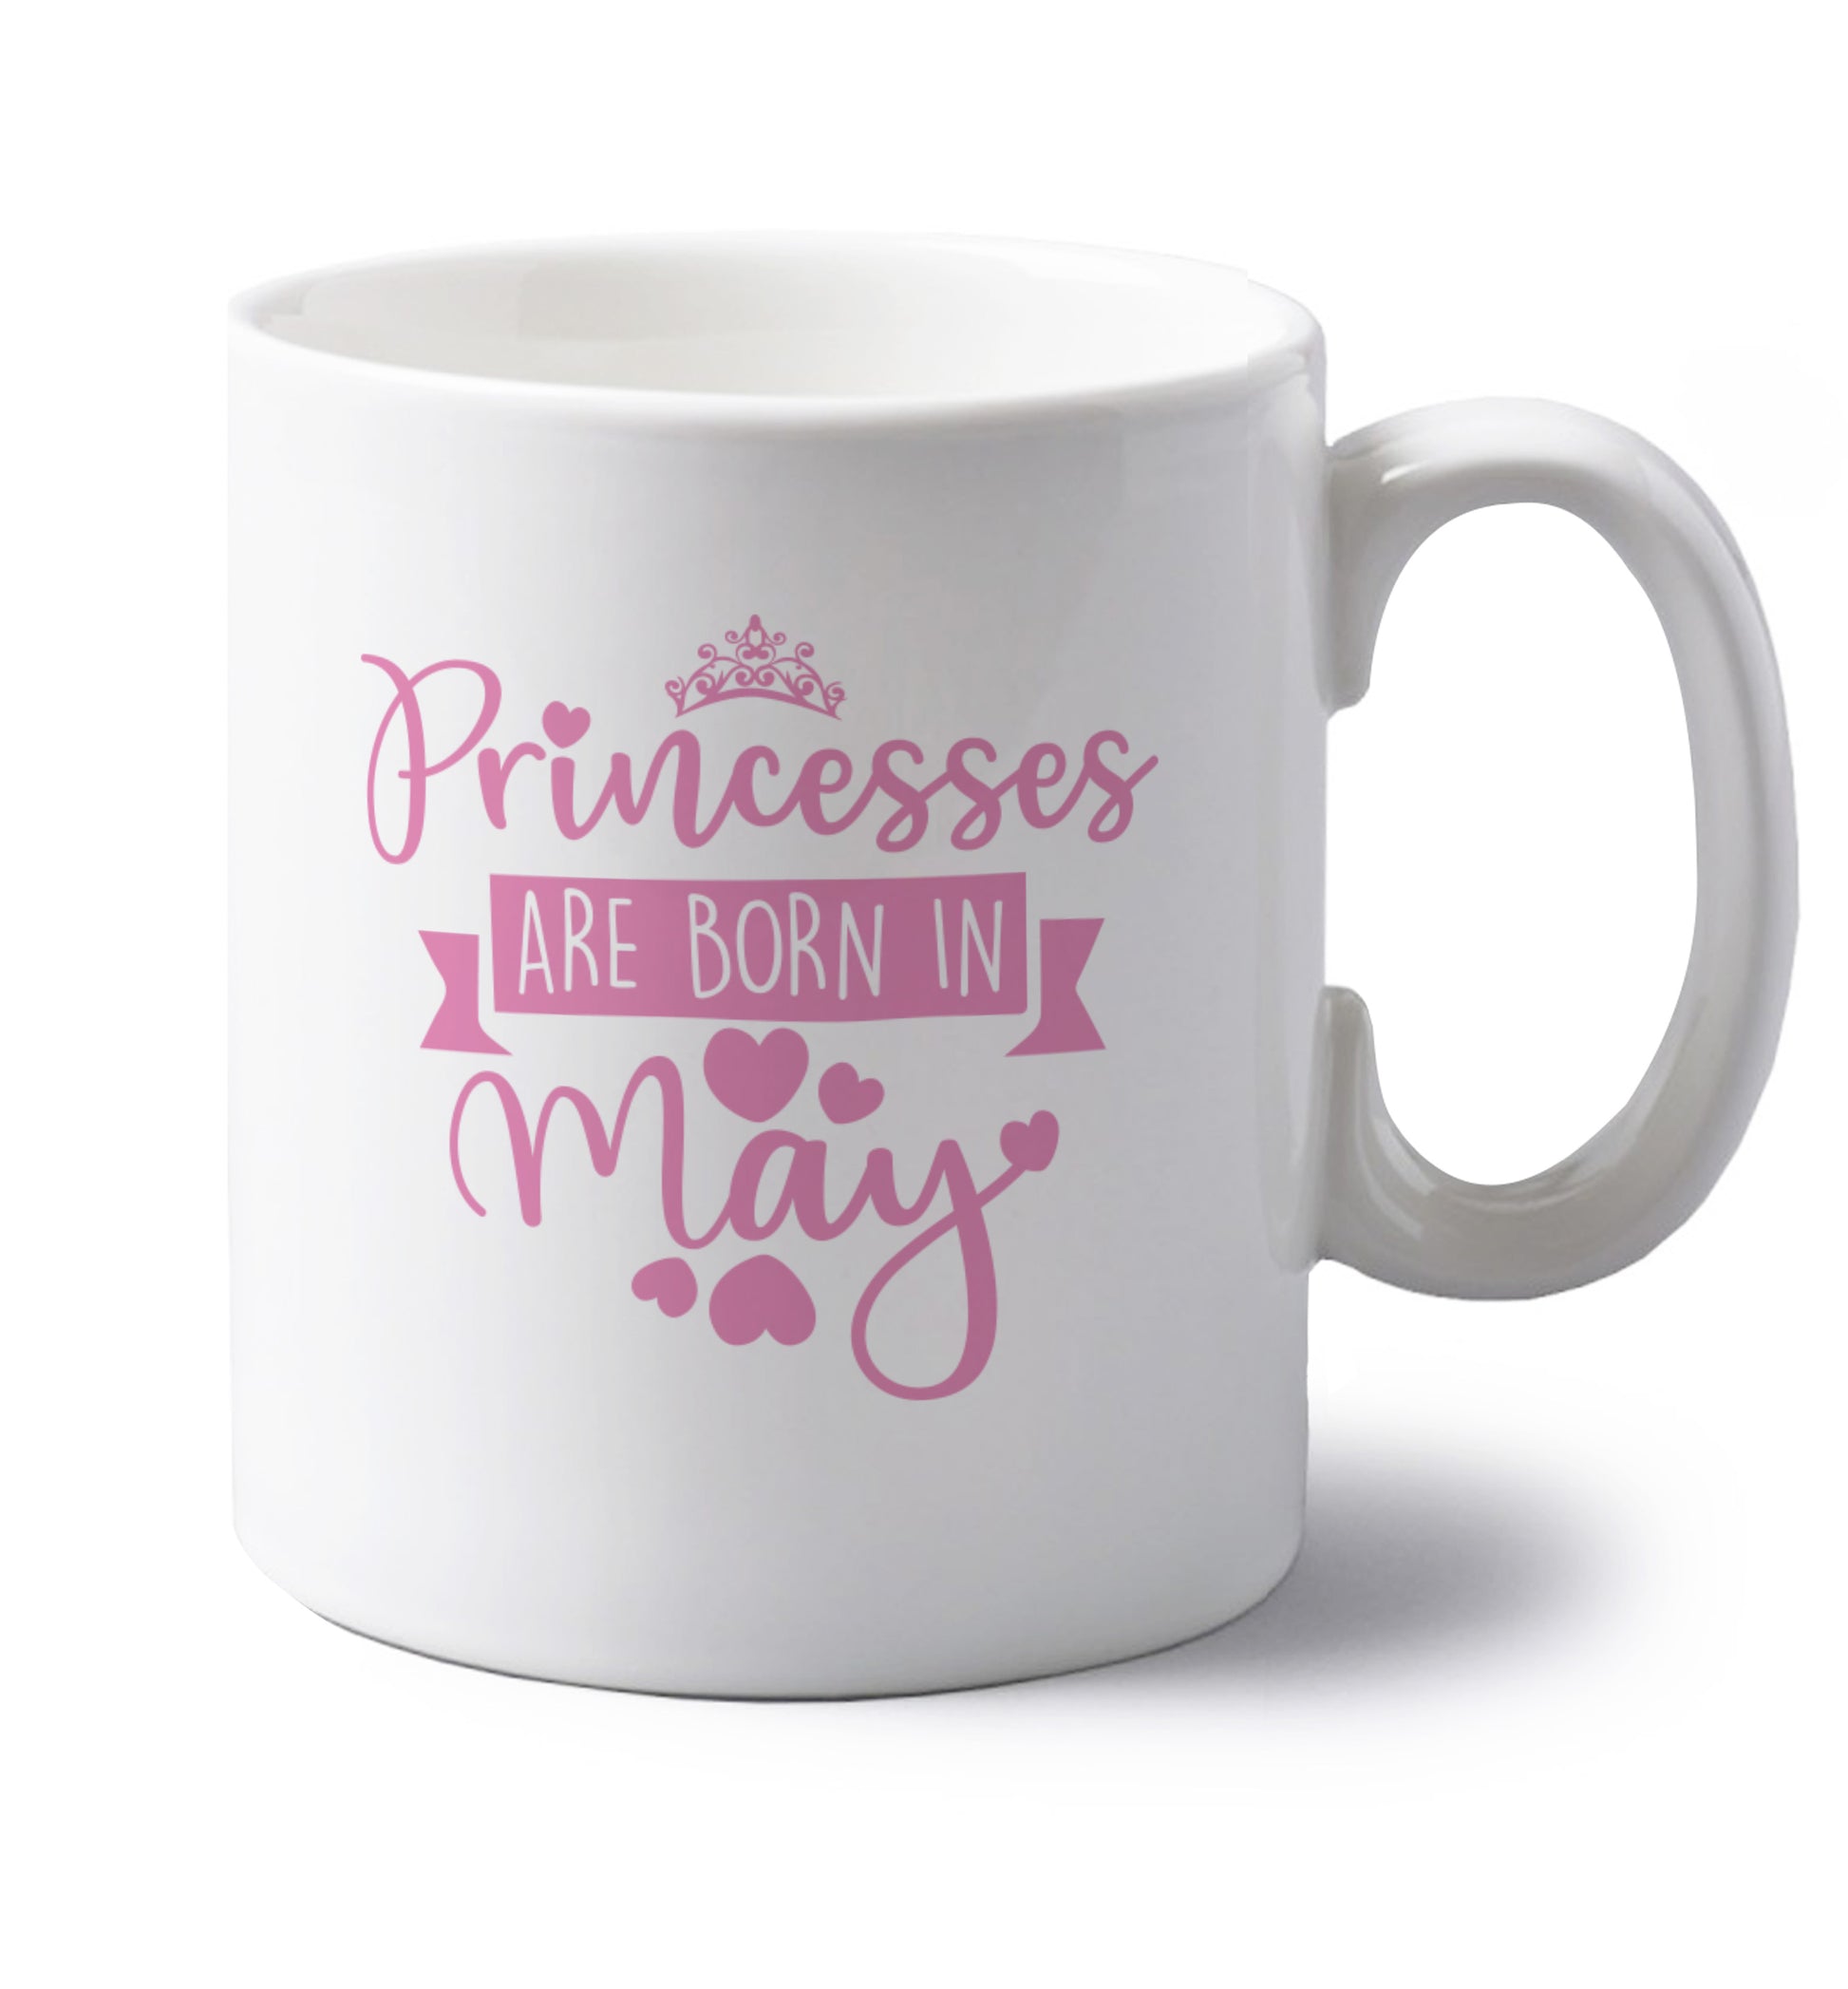 Princesses are born in May left handed white ceramic mug 